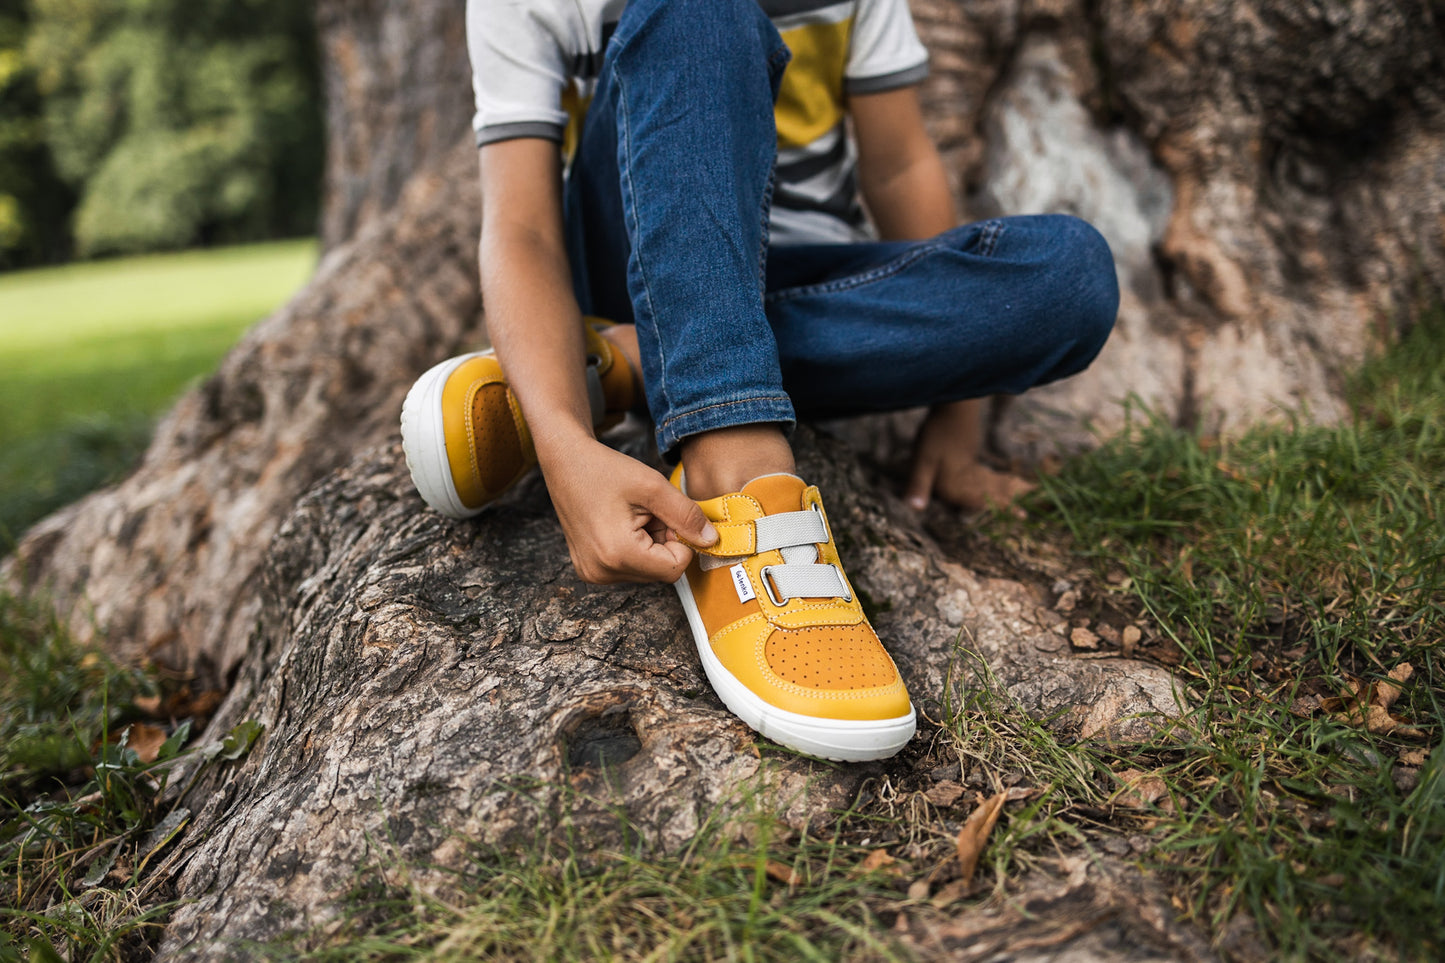 Barefoot zapatillas de niños Be Lenka Fluid - Mustard & Mango